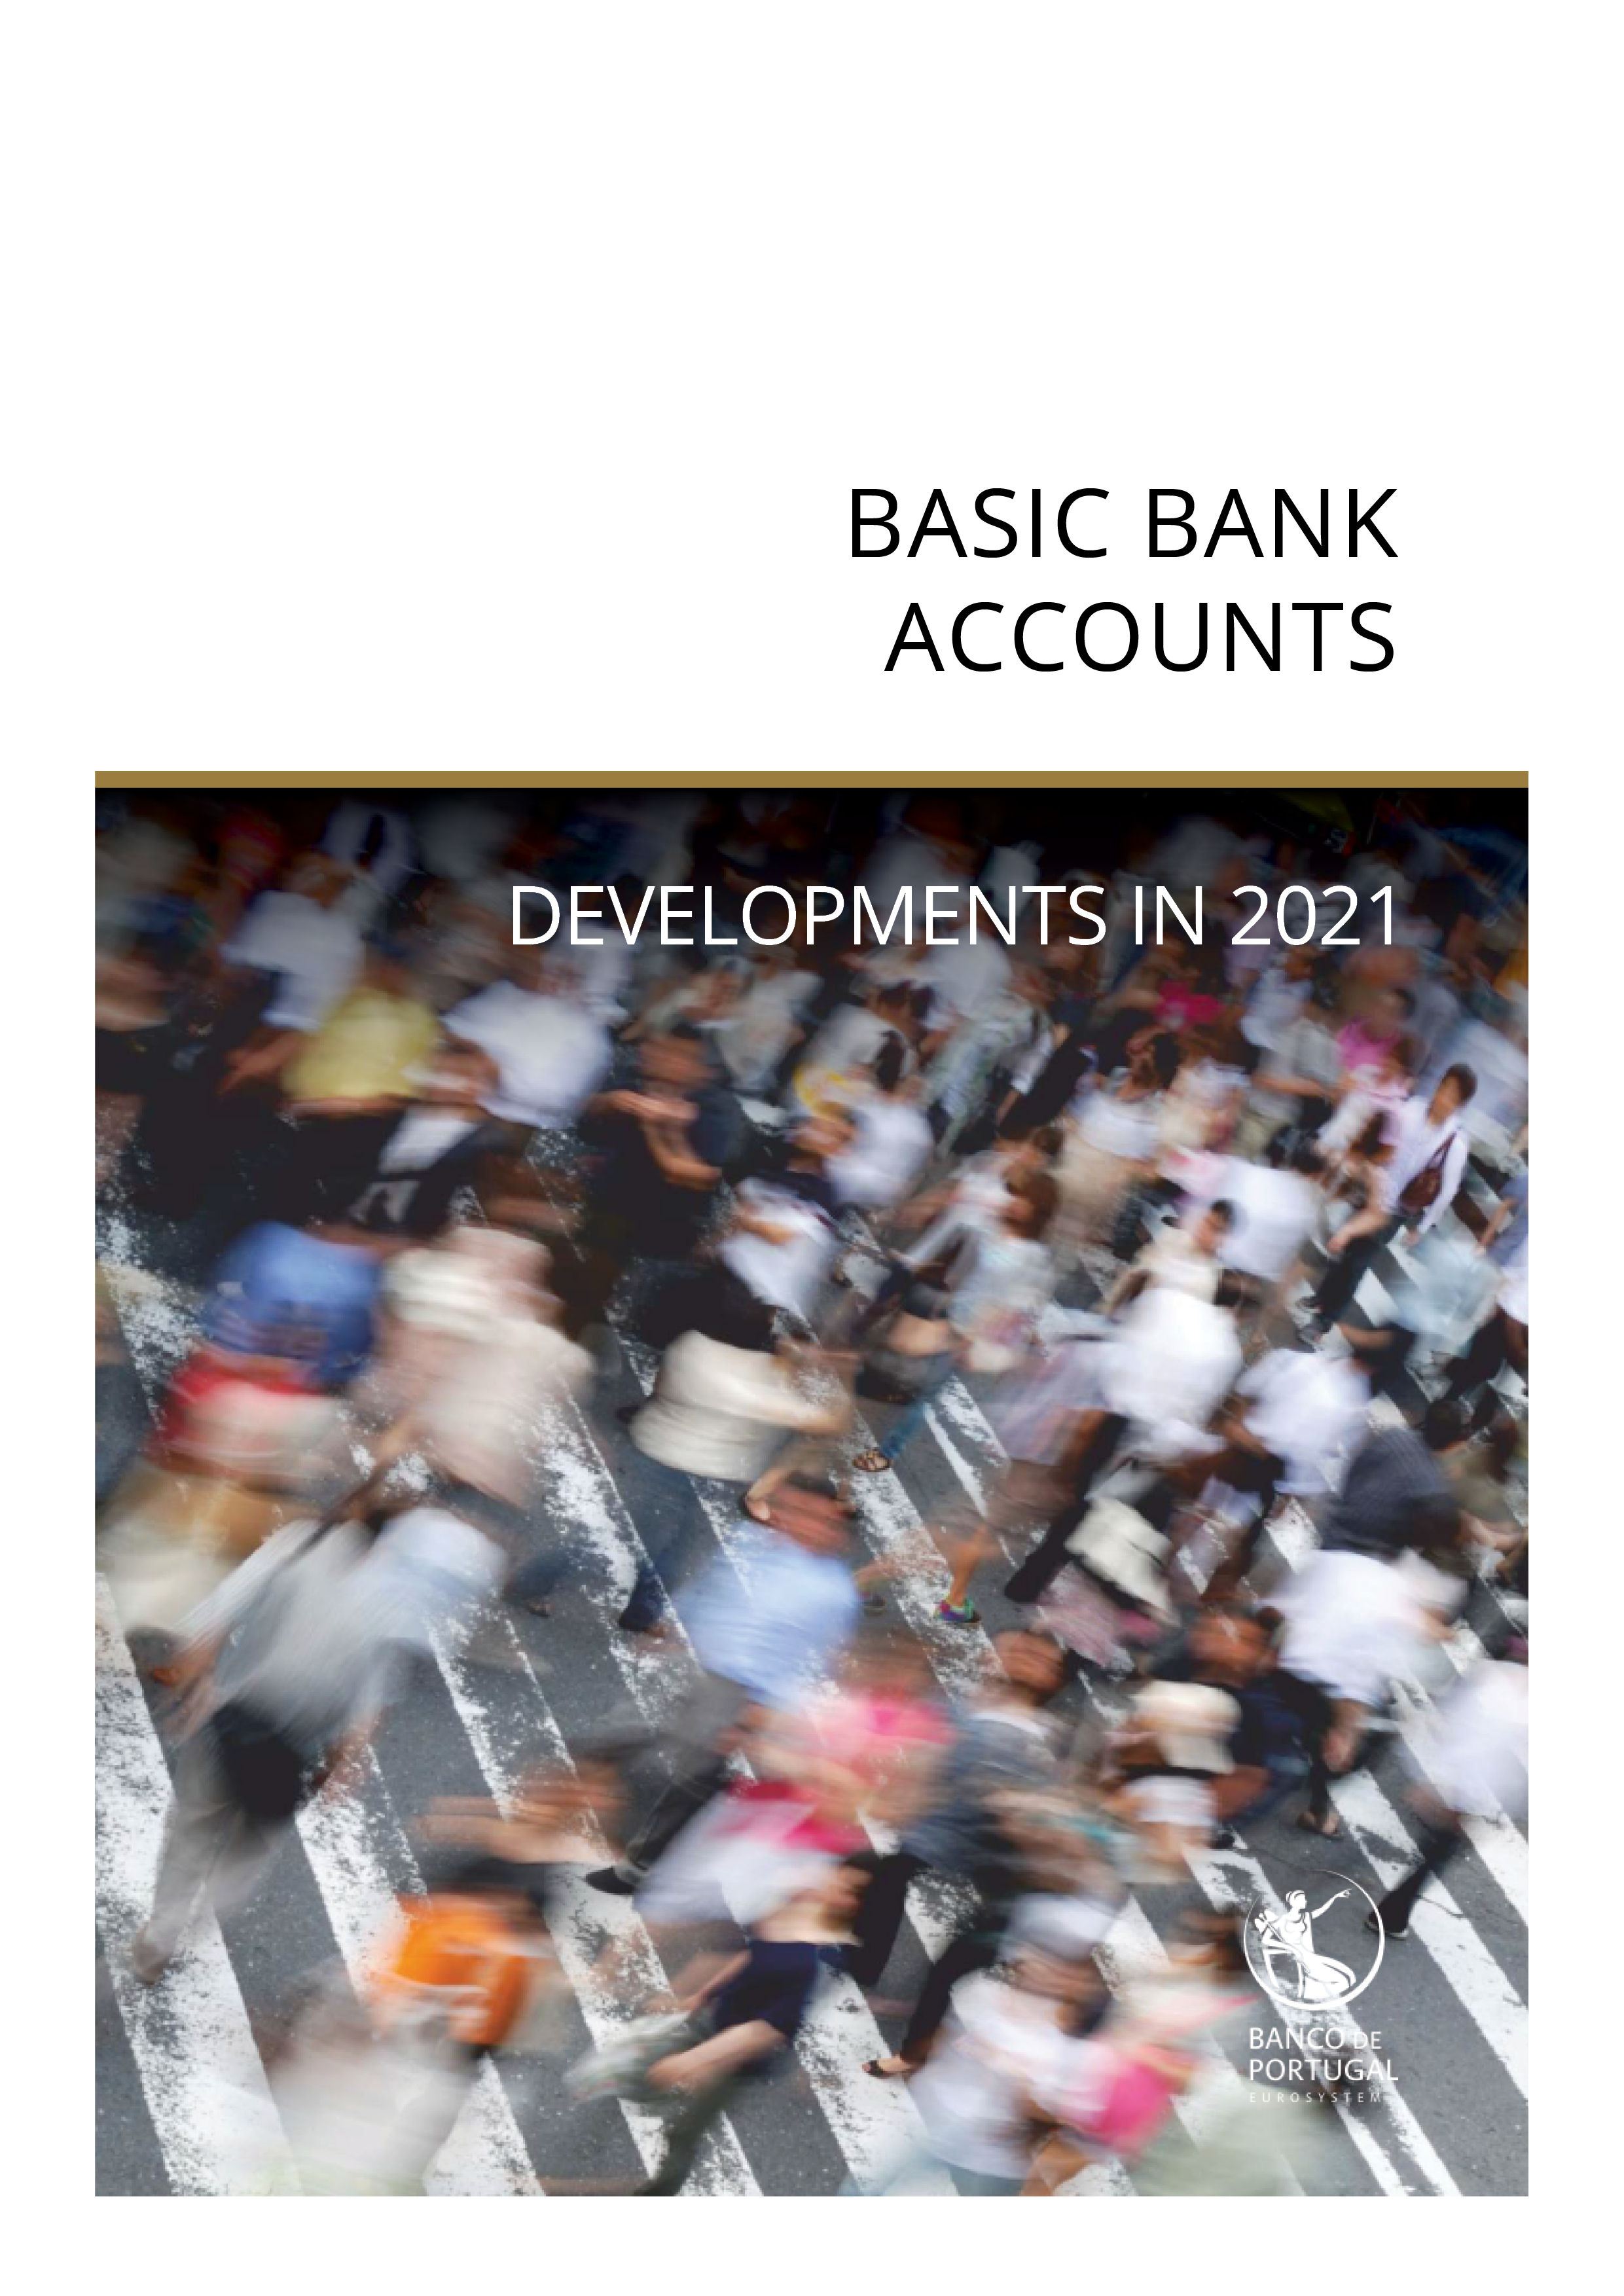 Developments of basic bank accounts in 2021